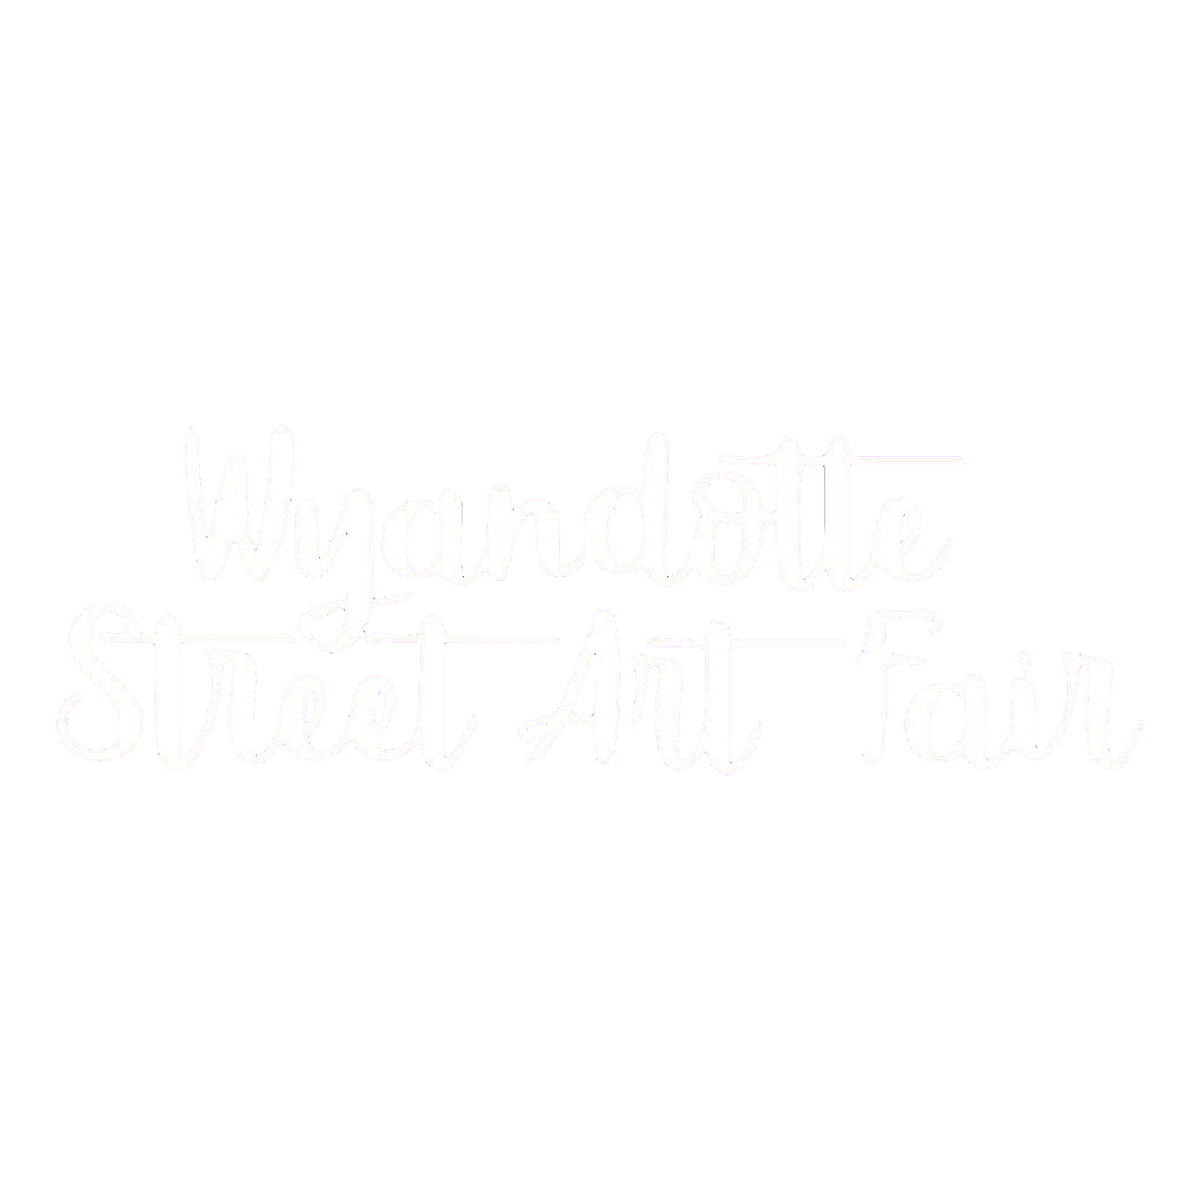 Wyandotte Street Art Fair logo